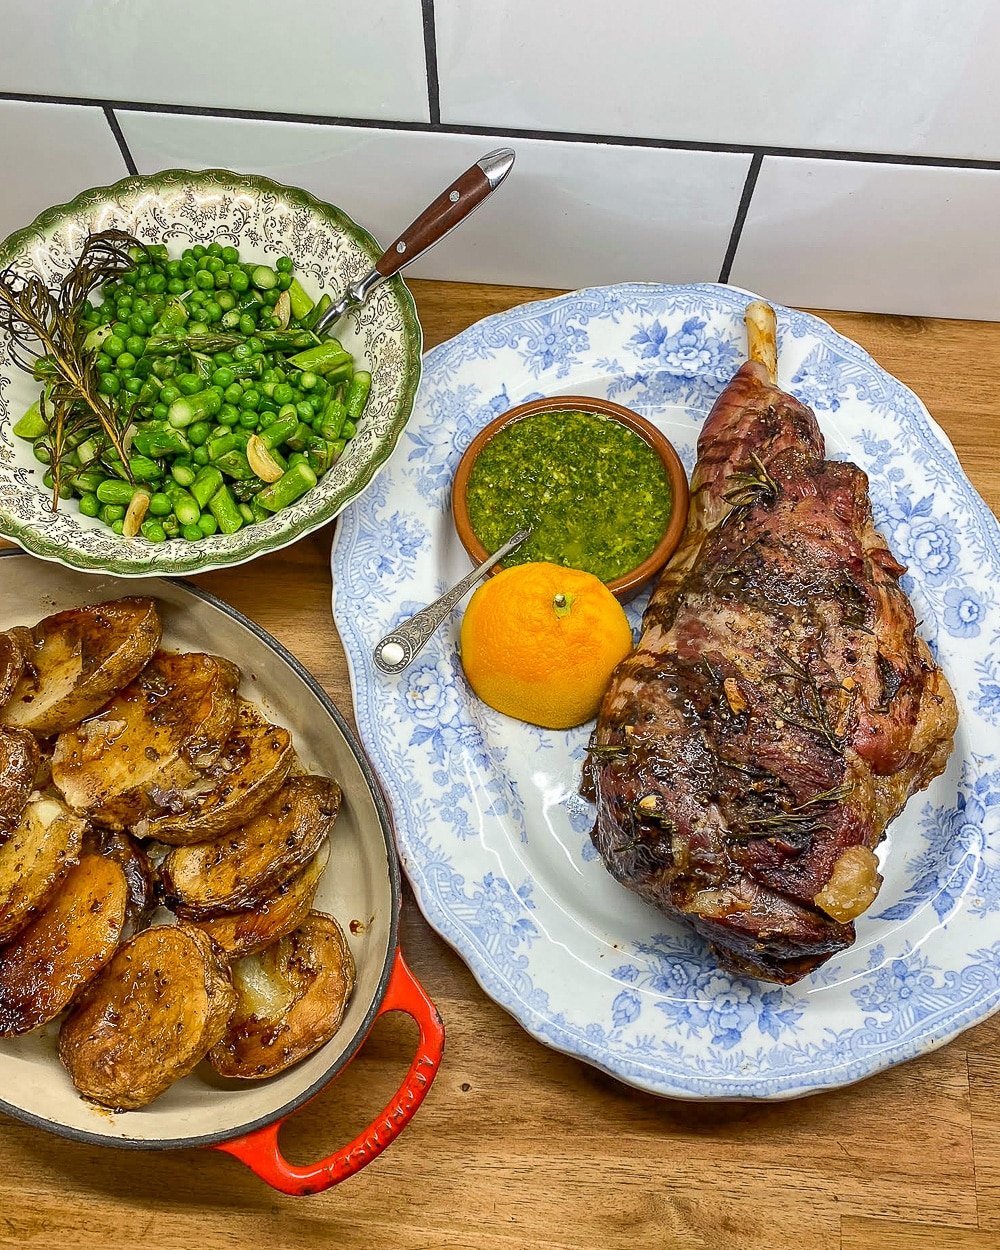 Roast leg of lamb with potatoes, mint gremolata and garlic peas and asparagus